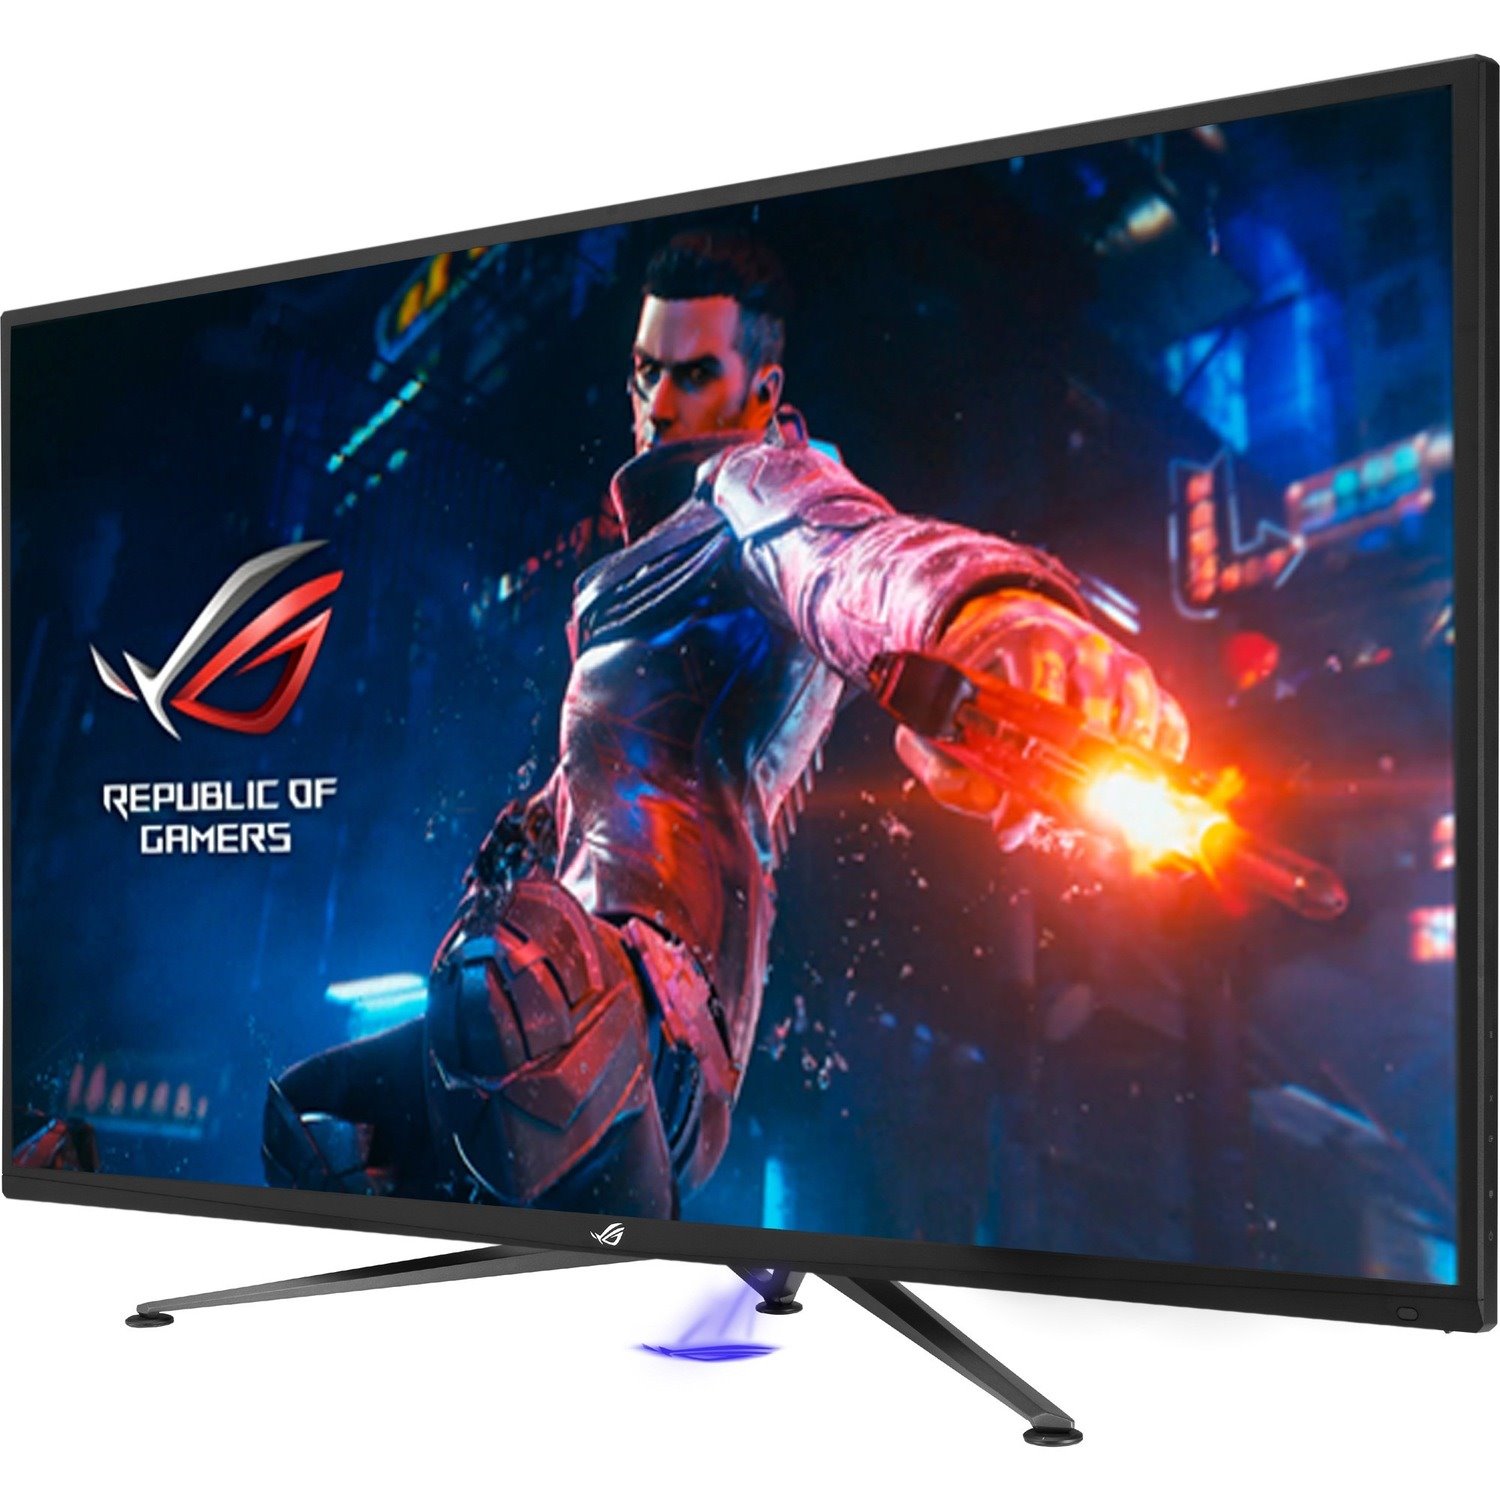 Asus ROG Swift PG43UQ 109.2 cm (43") LED Gaming LCD Monitor - 16:9 - Black